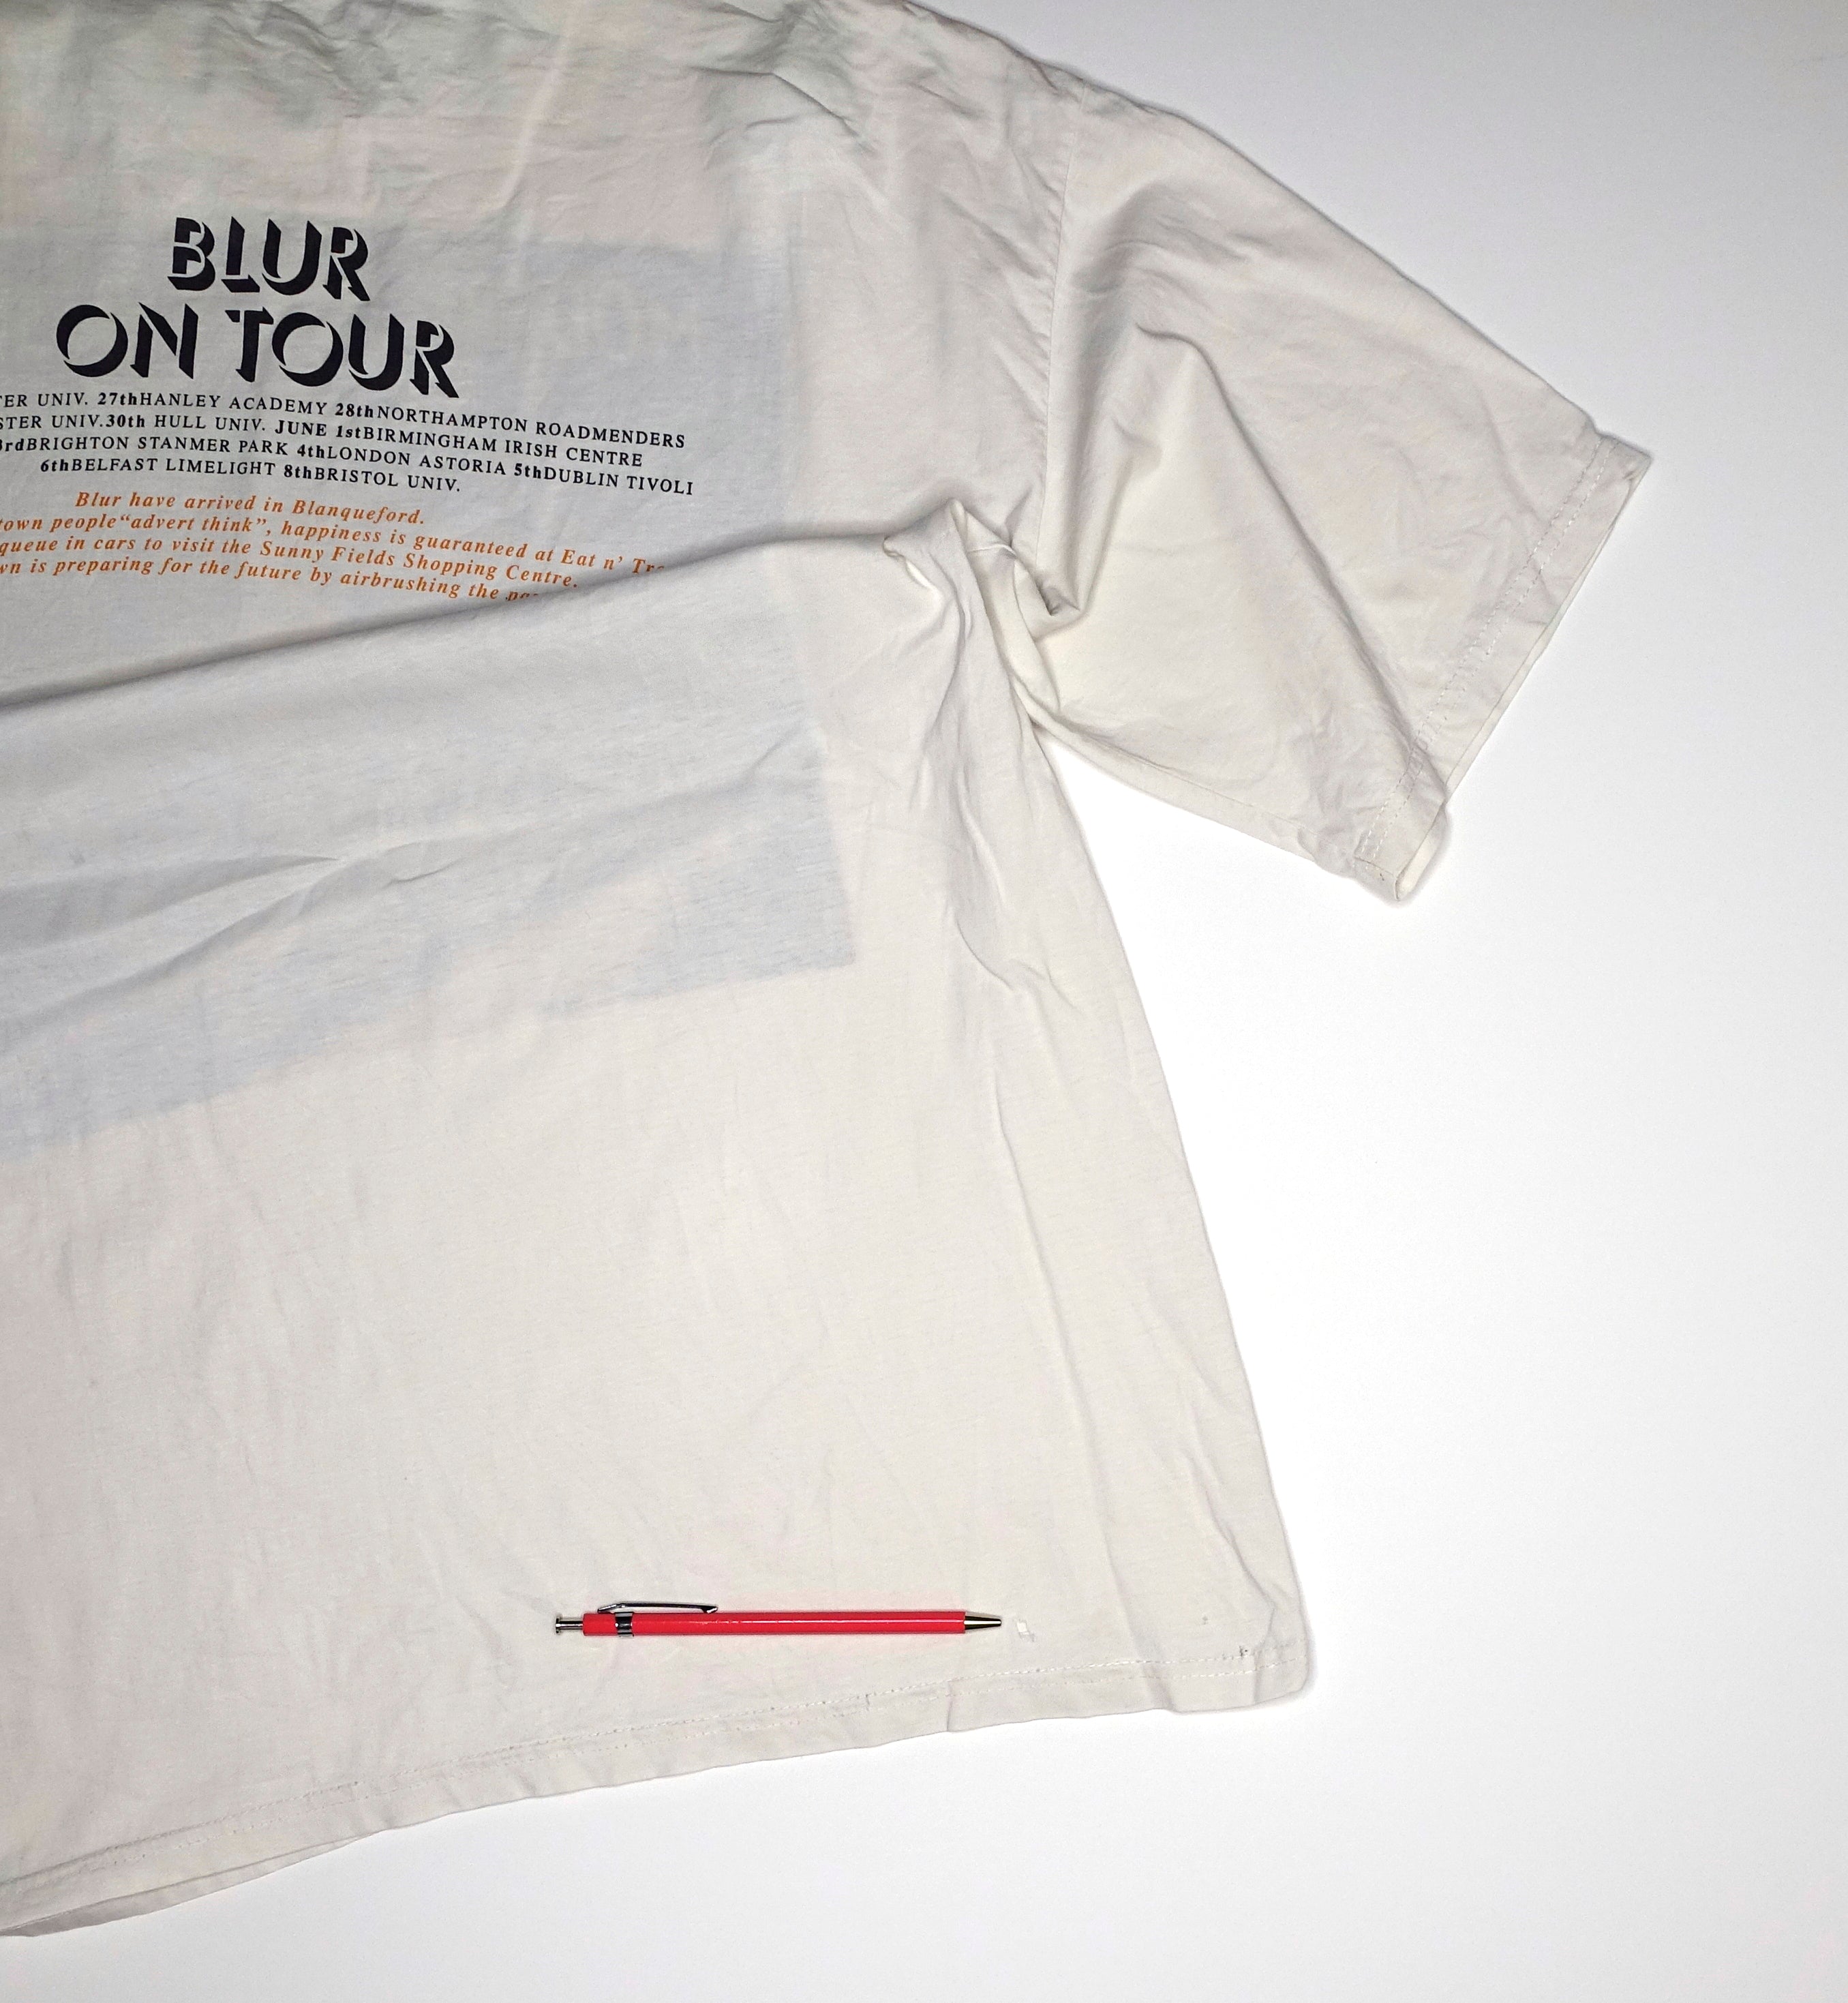 Blur ‎– Modern Life Is Rubbish 1993 UK Tour Shirt Size XL